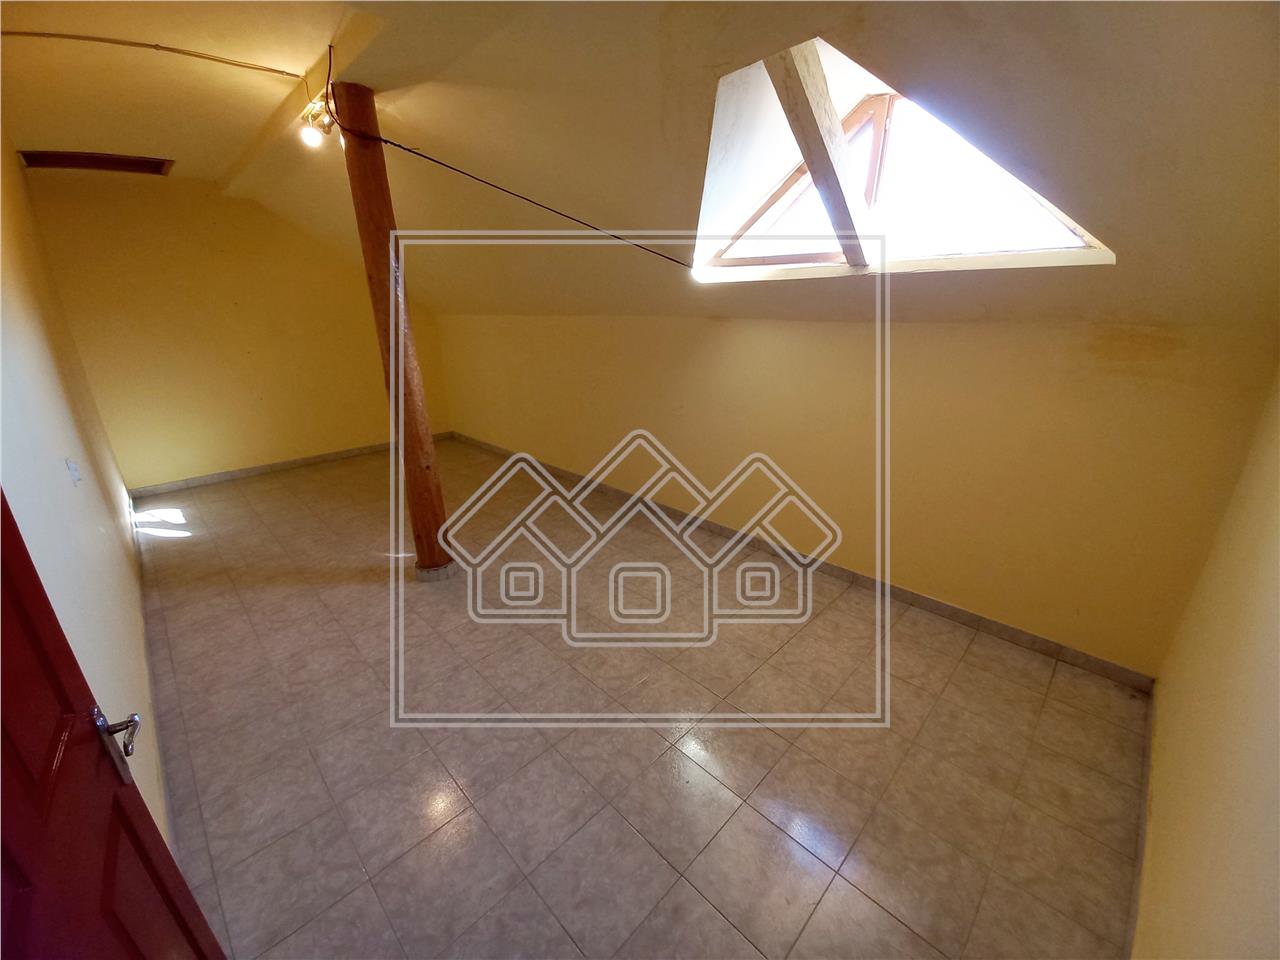 House for sale in Alba Iulia - 9 rooms - 4 bathrooms - 2 balconies - C